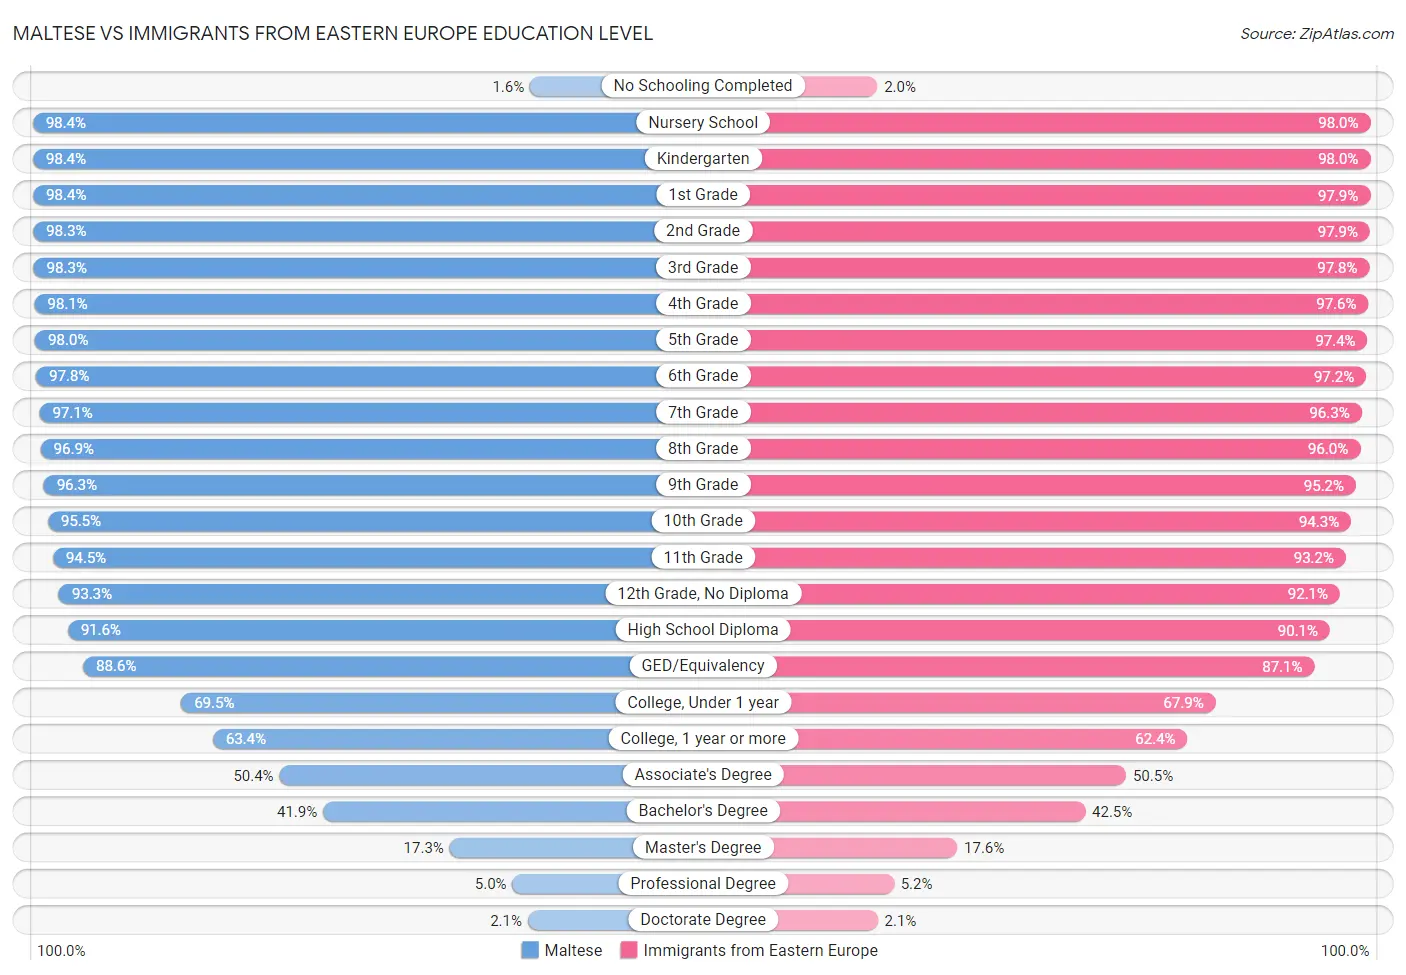 Maltese vs Immigrants from Eastern Europe Education Level